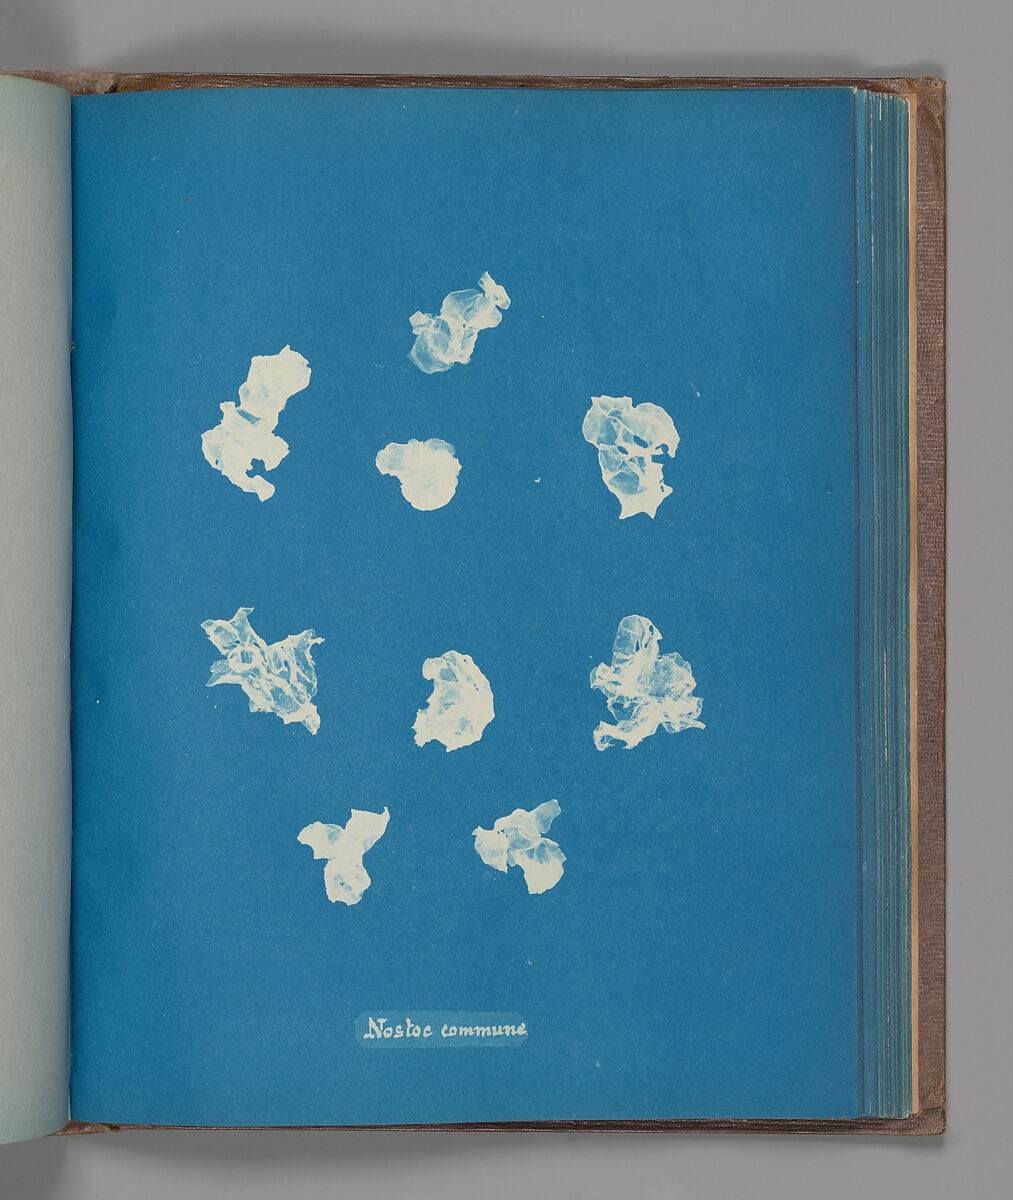 Nostoe commune, Anna Atkins (British, 1799–1871), Cyanotype 